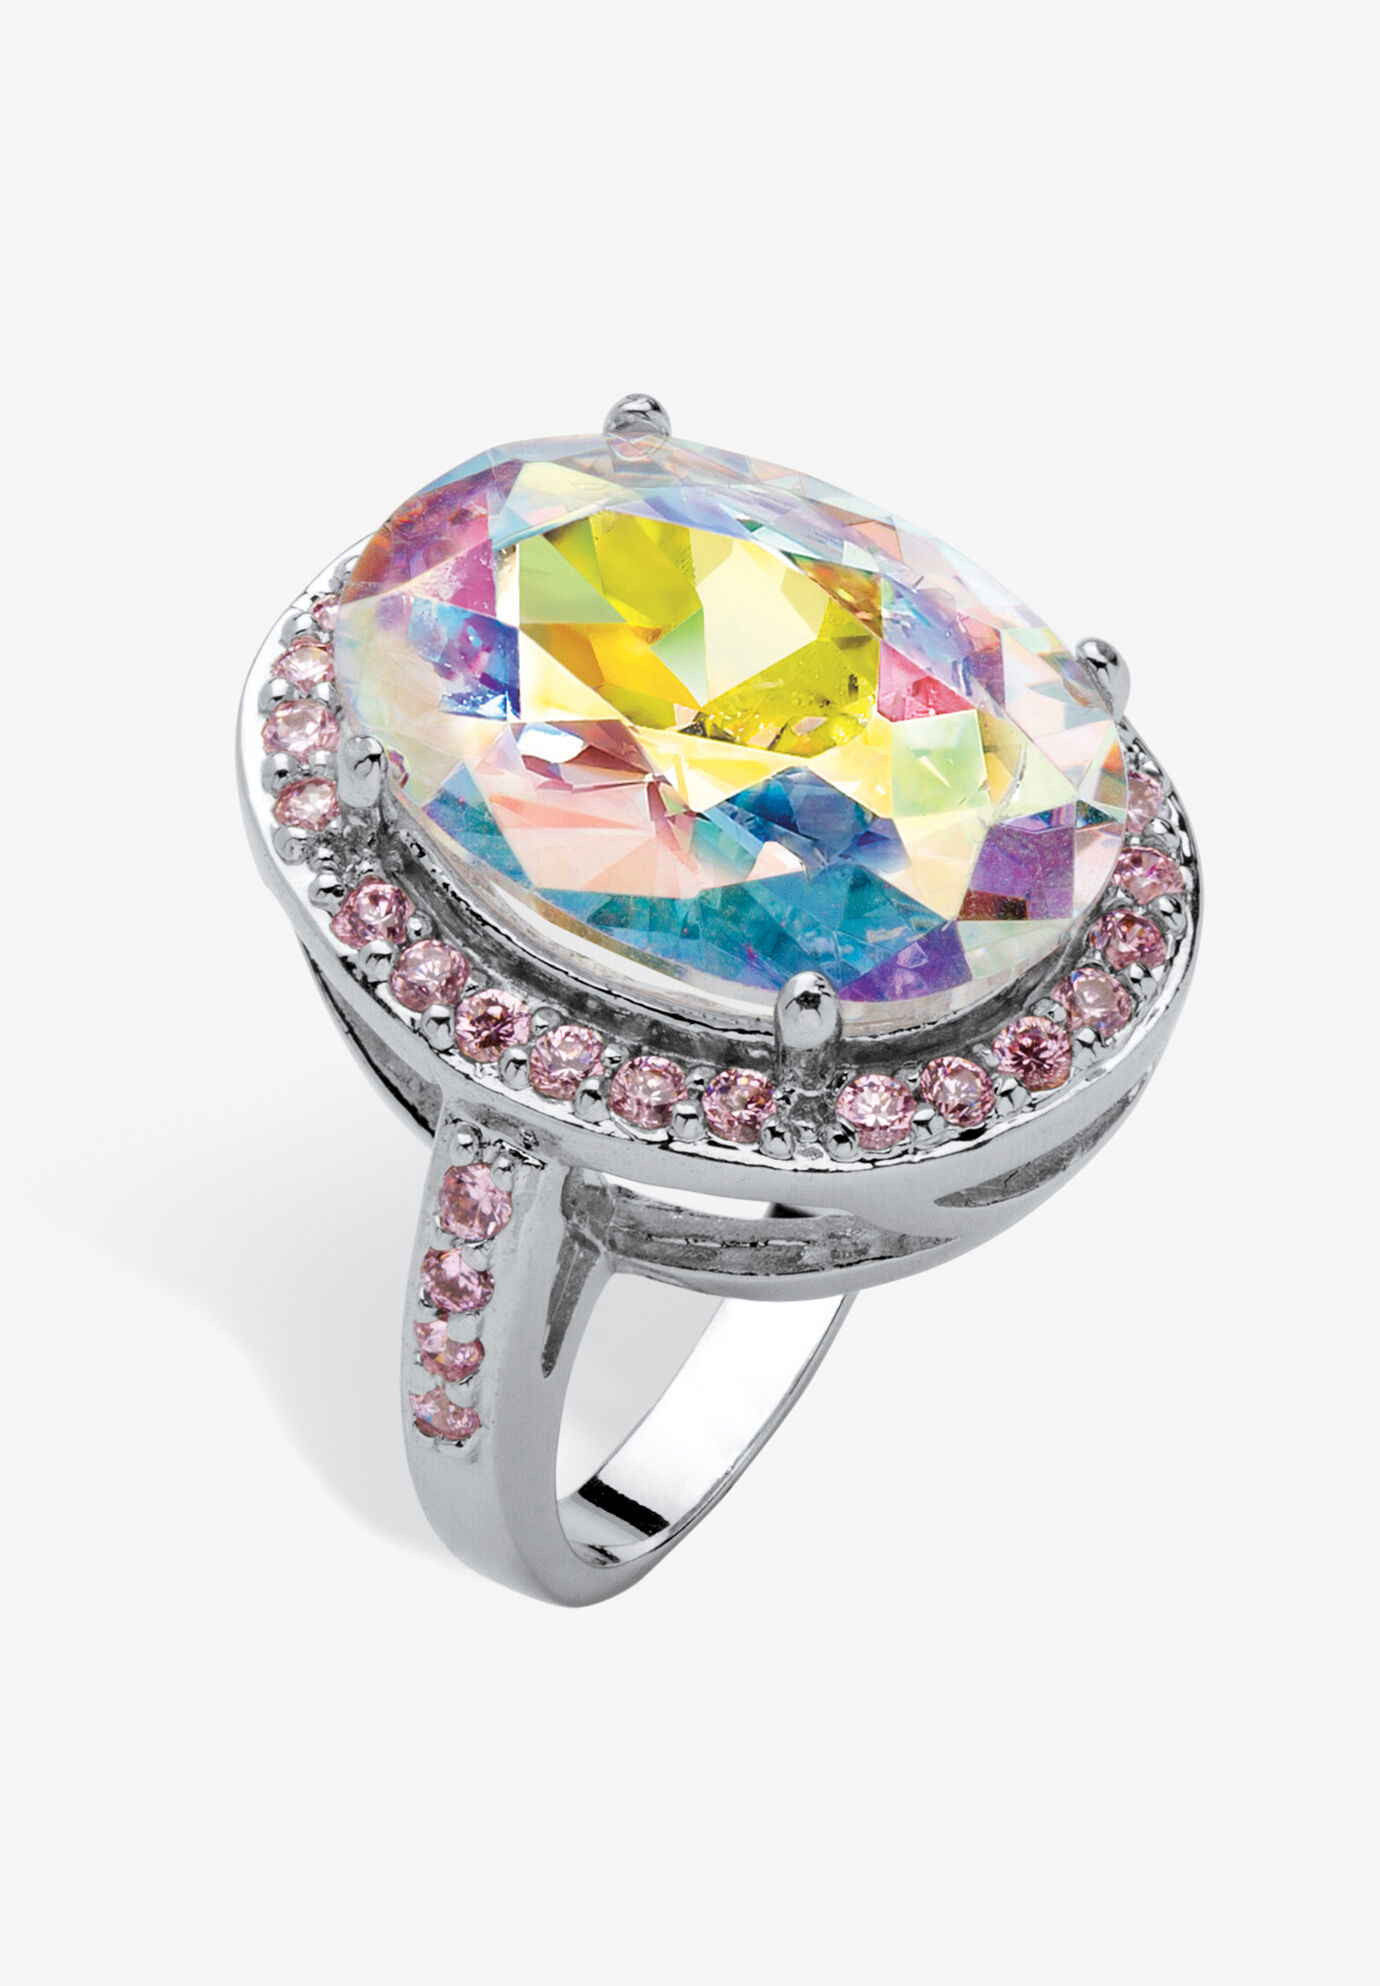 Jewelry | Gold Tone Ring With Aurora Borealis Stone 1825 | Poshmark